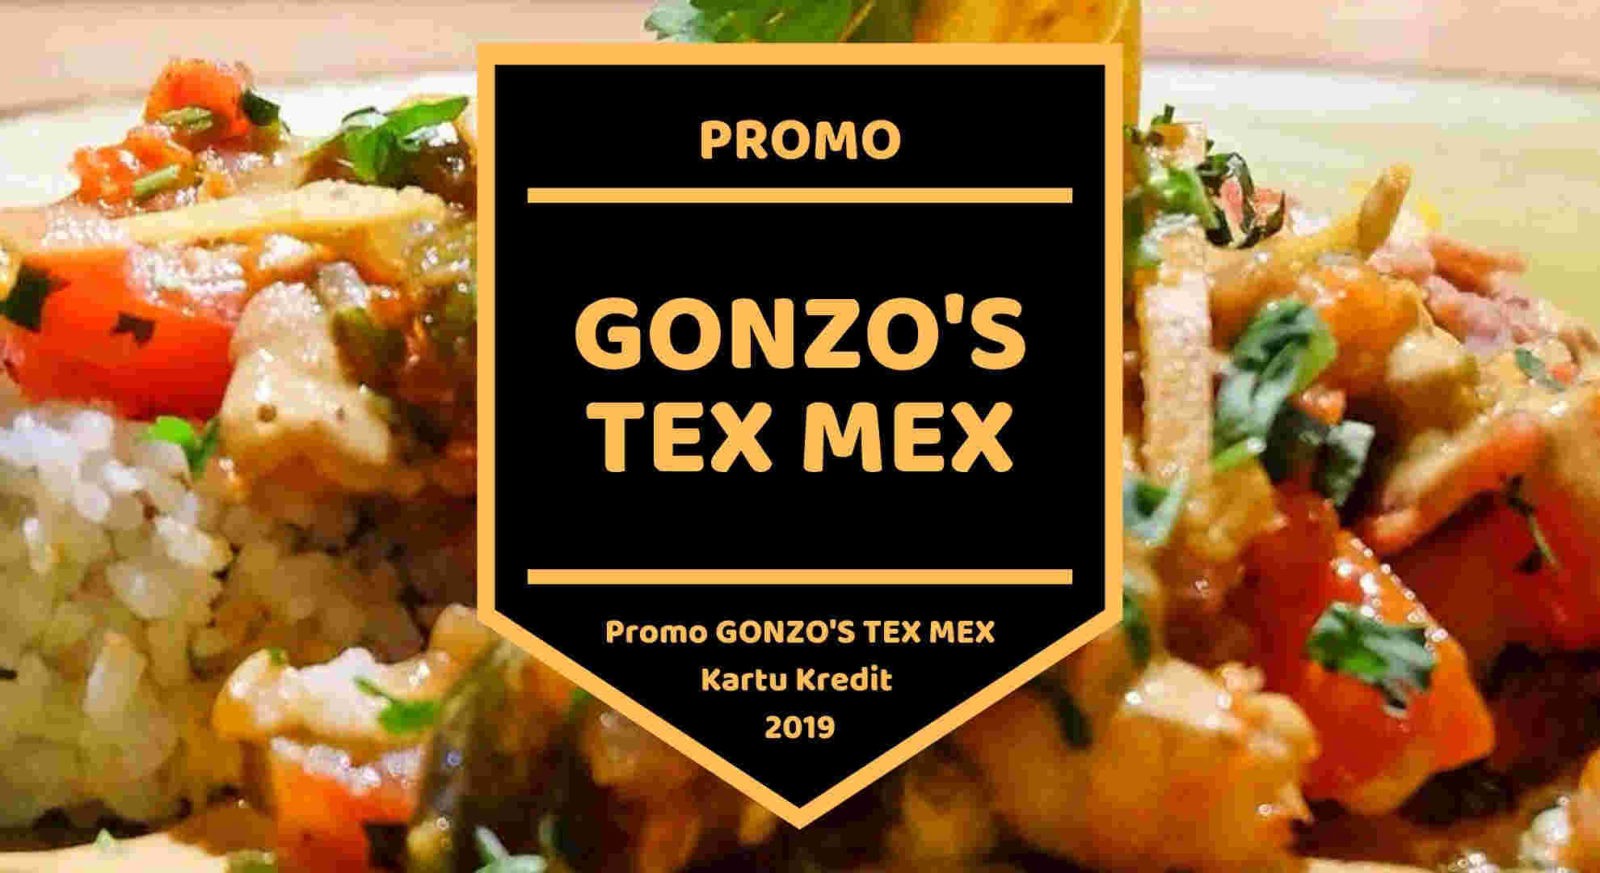 Promo Gonzo's Tex Mex